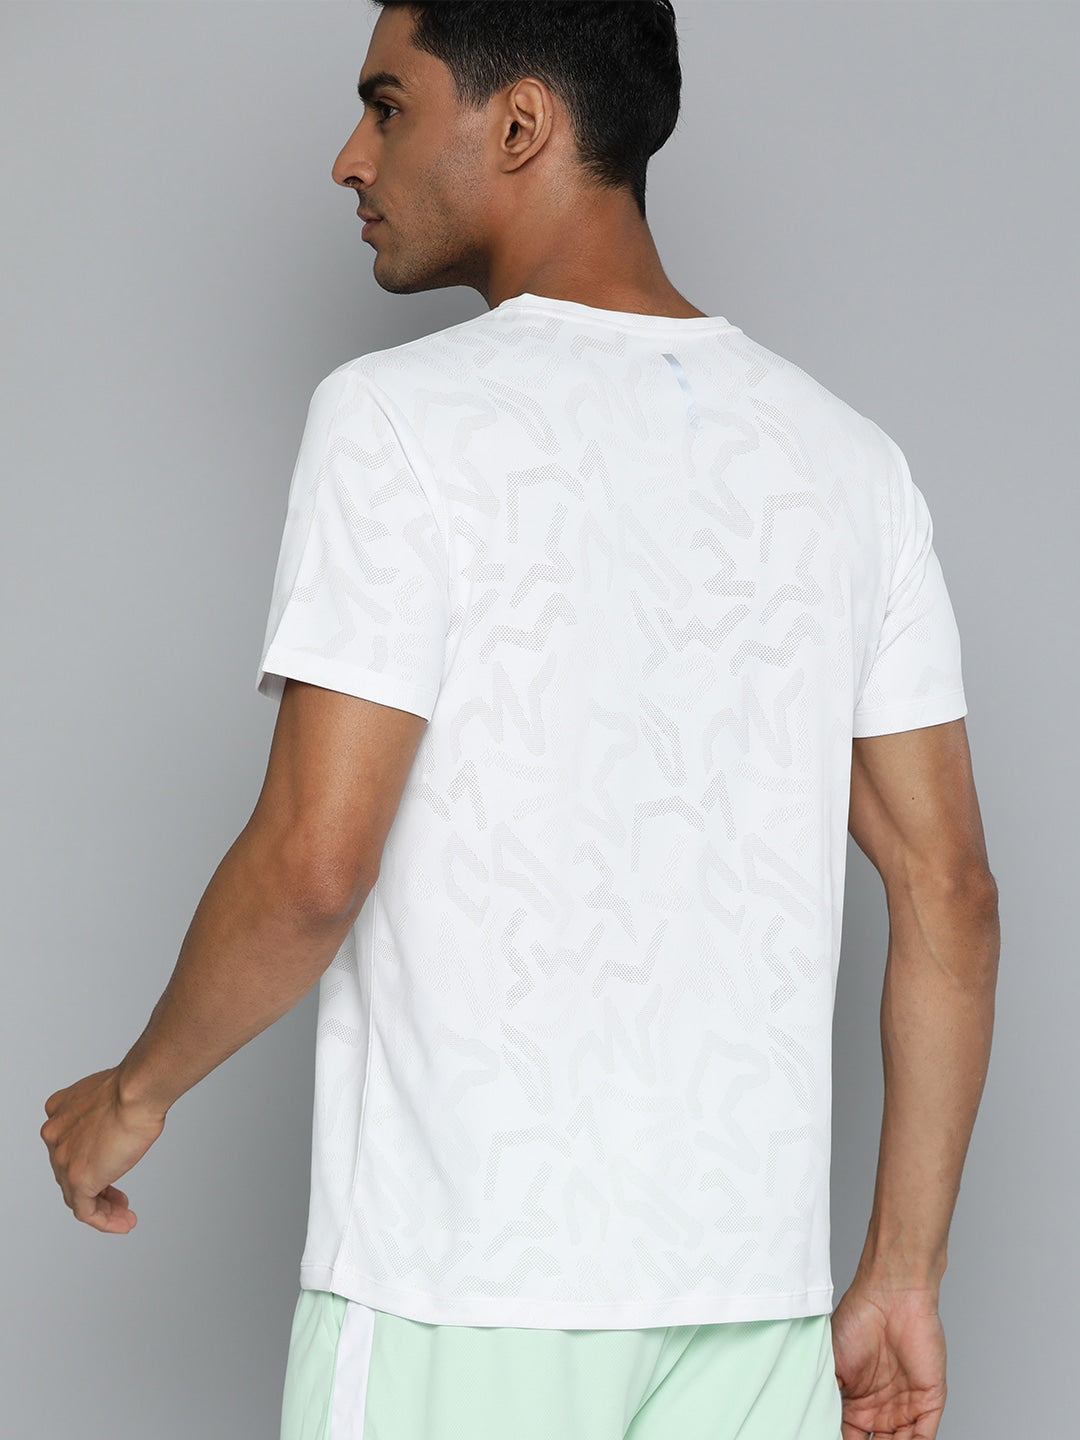 Buy HRX By Hrithik Roshan Brand Logo Printed Rapid Dry Sports T Shirt -  Tshirts for Men 23110766